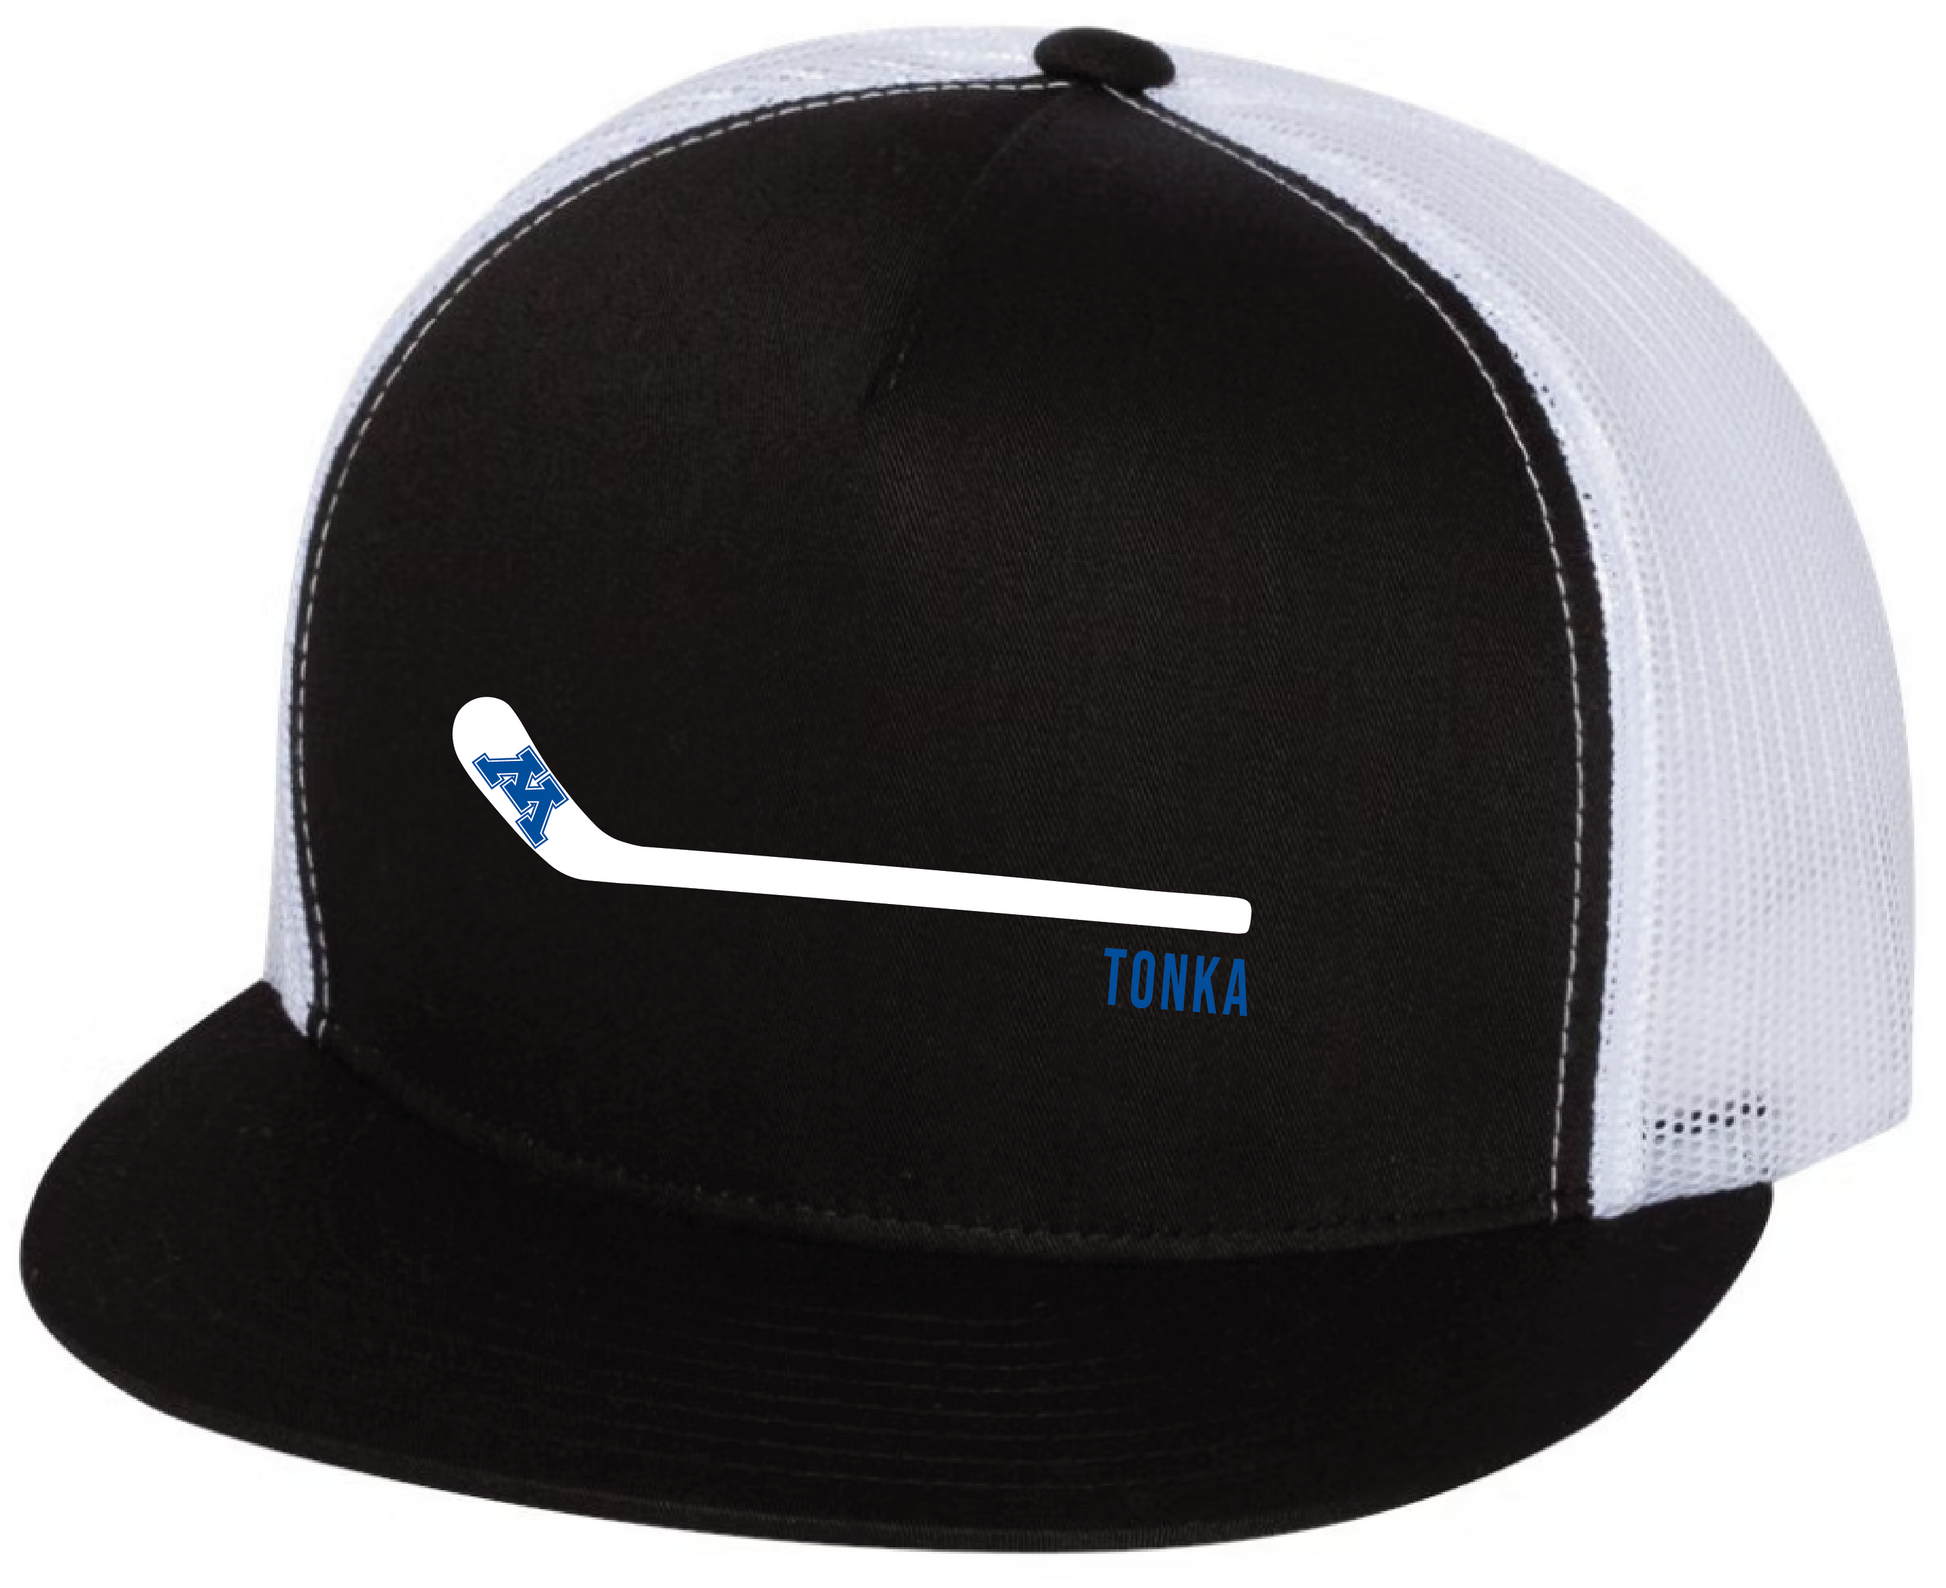 Tonka Hockey Stick Black/White